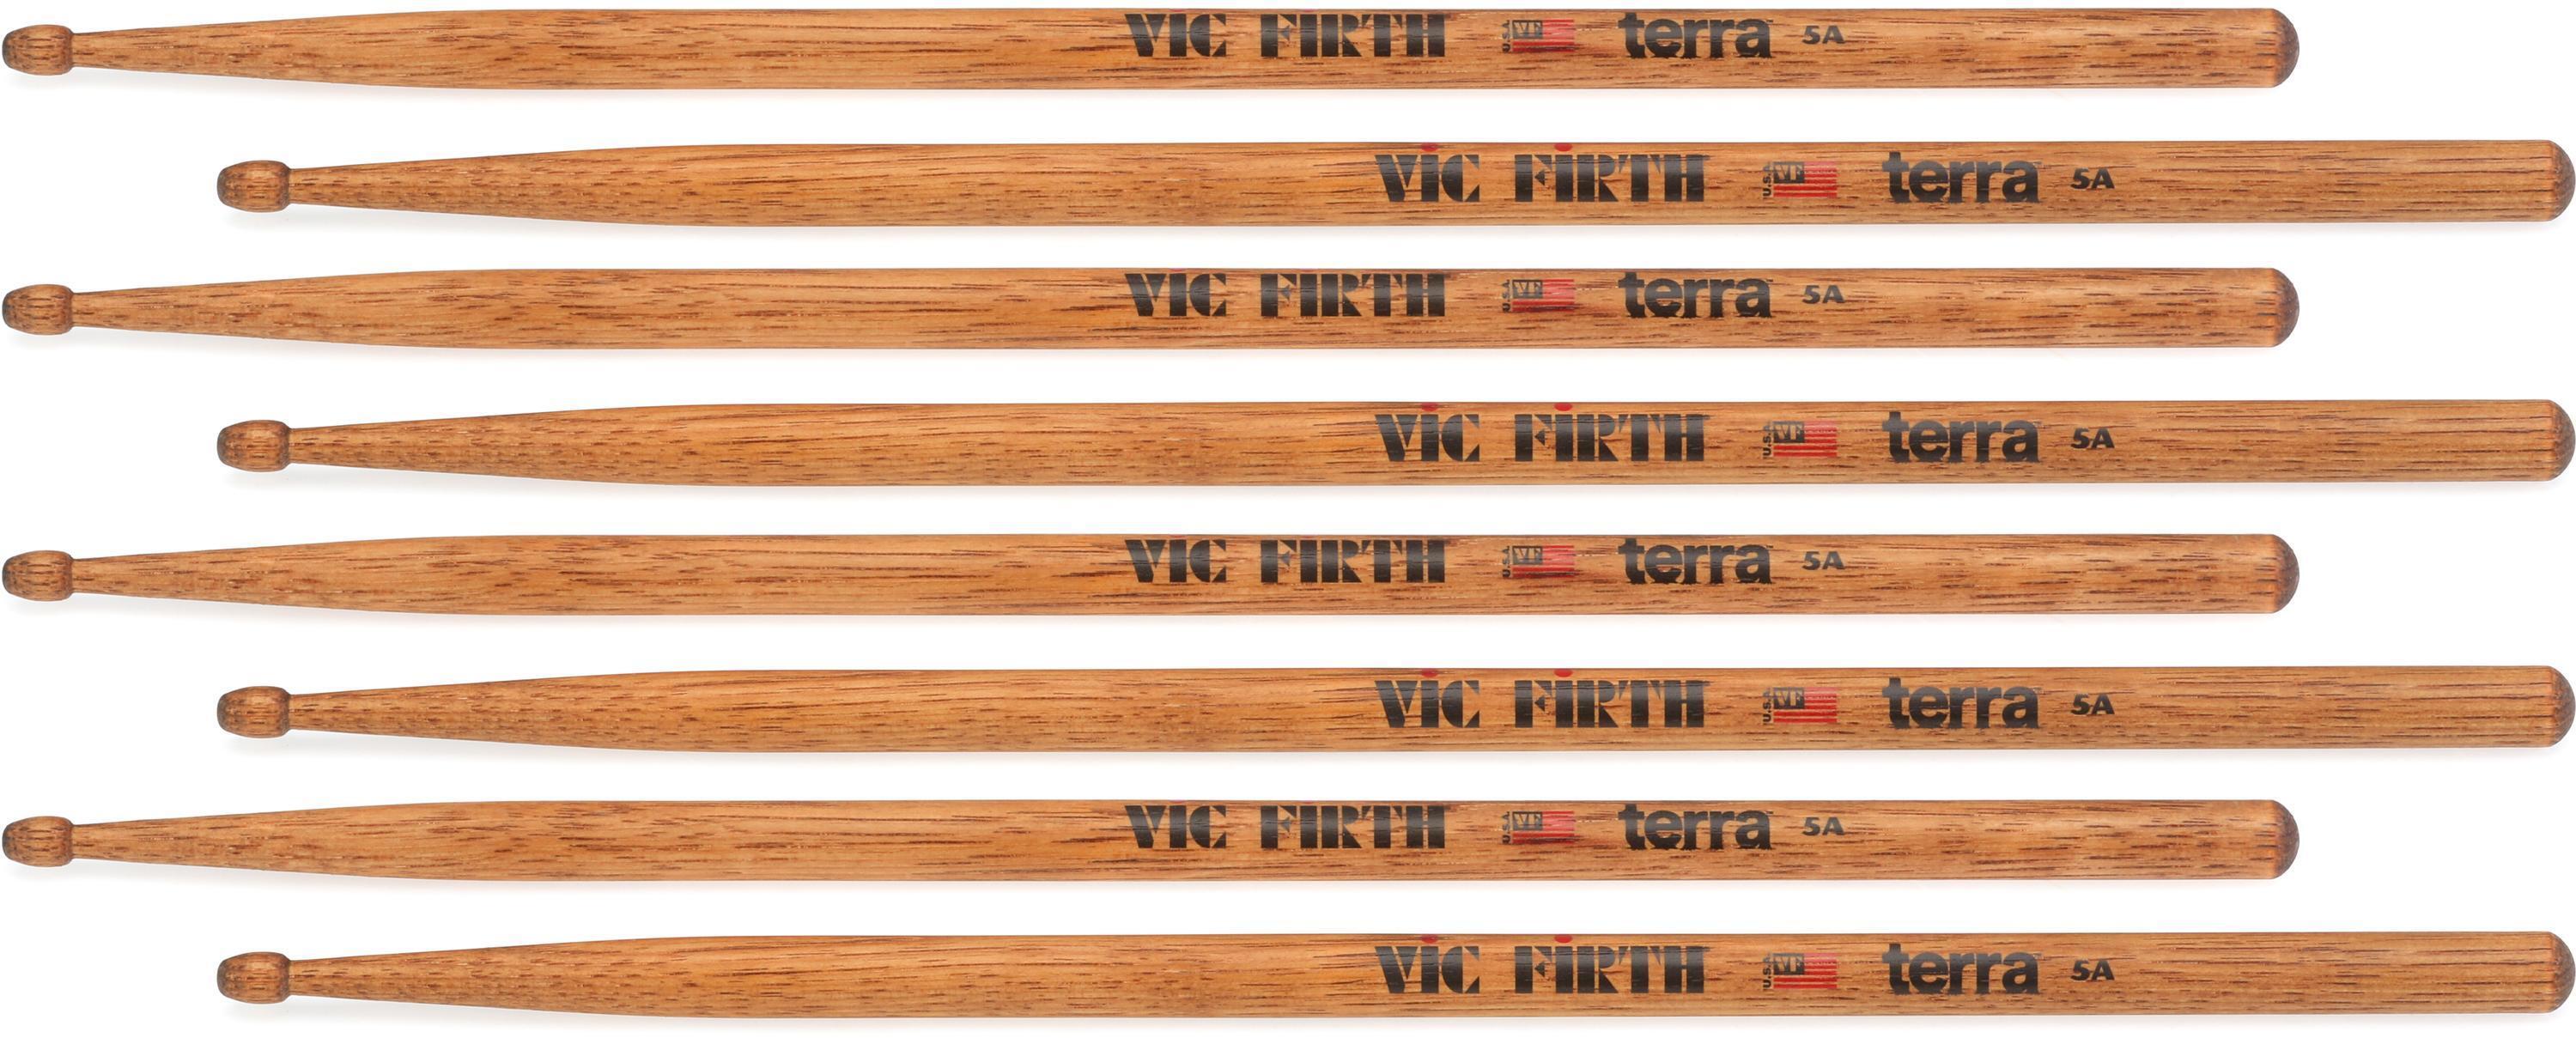 Vic Firth American Classic Terra Drumsticks - 5A, Nylon Tip (4